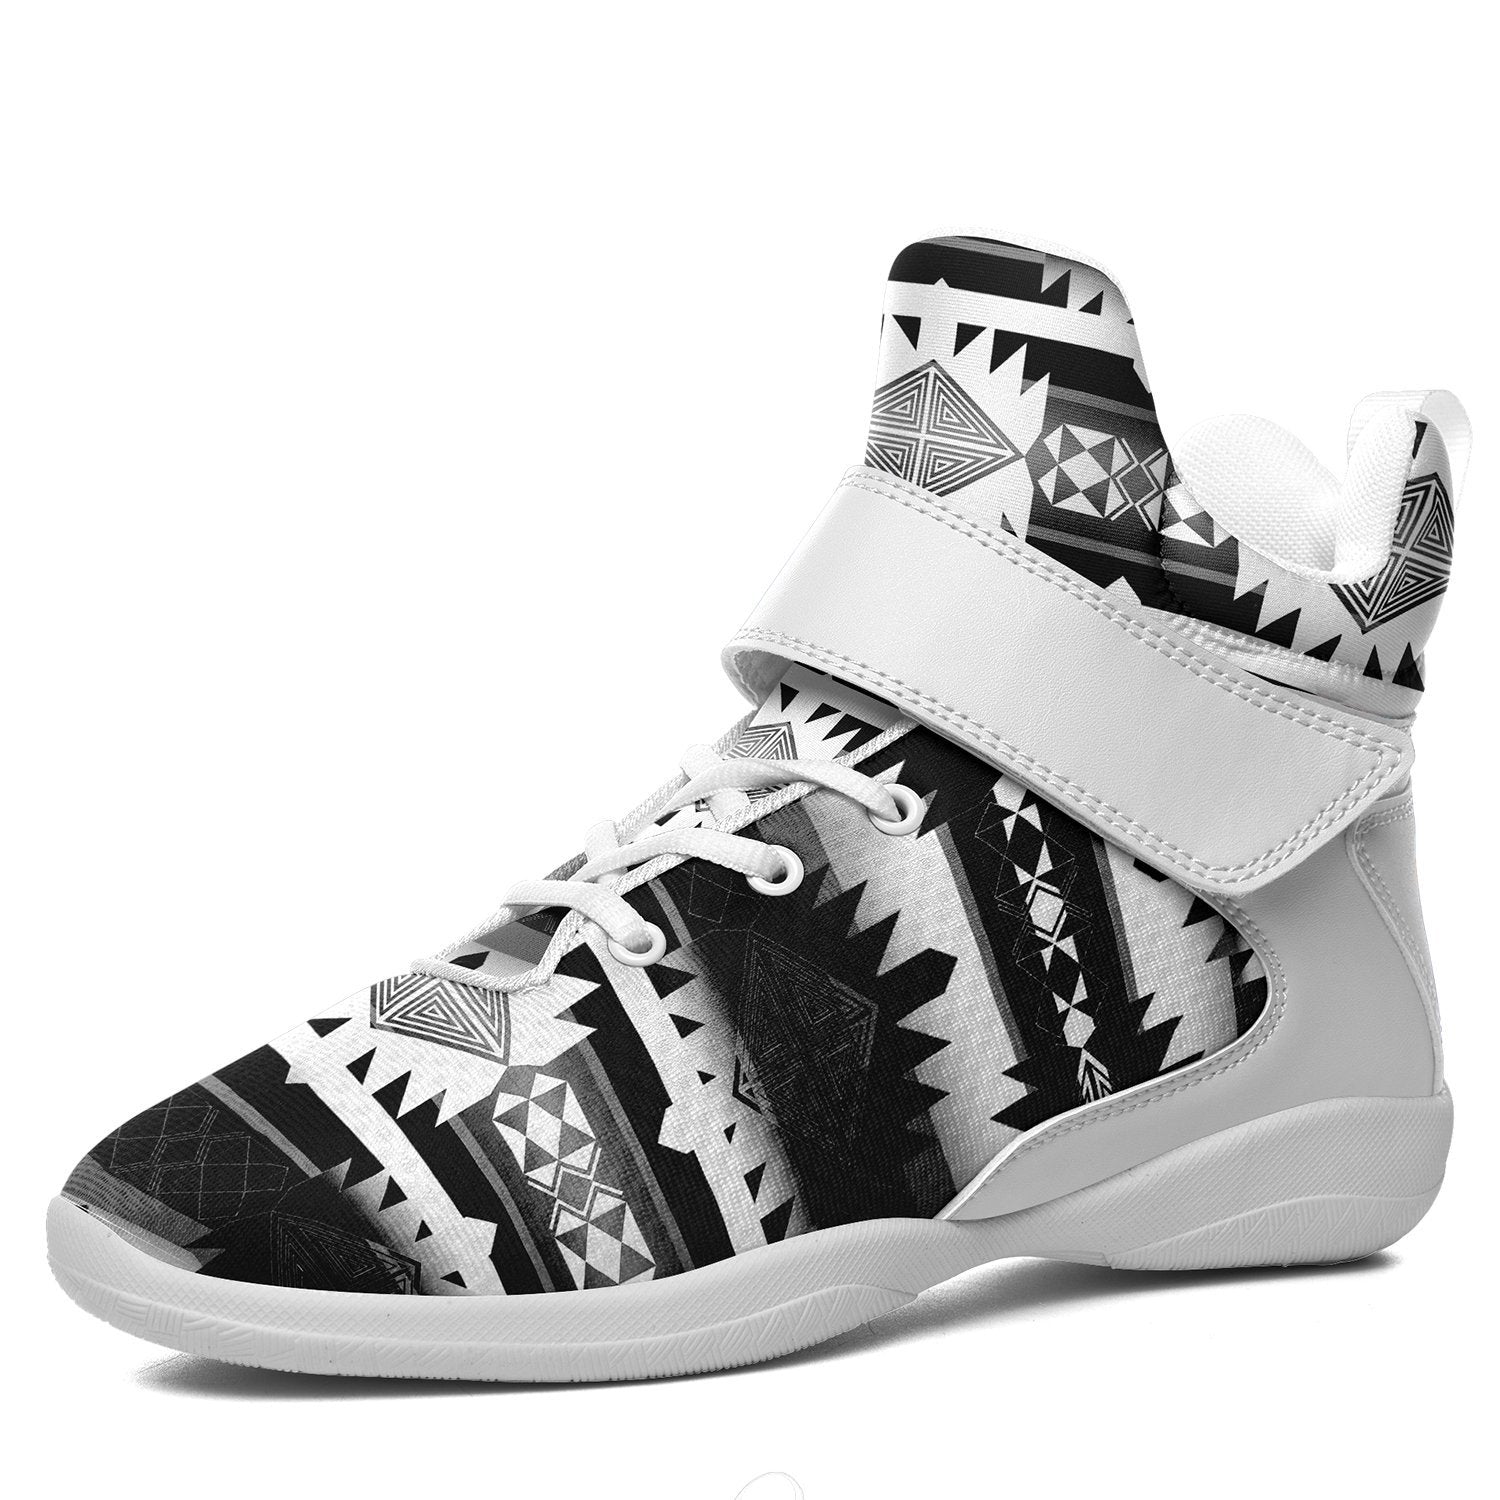 Okotoks Black and White Ipottaa Basketball / Sport High Top Shoes - White Sole 49 Dzine US Men 7 / EUR 40 White Sole with White Strap 